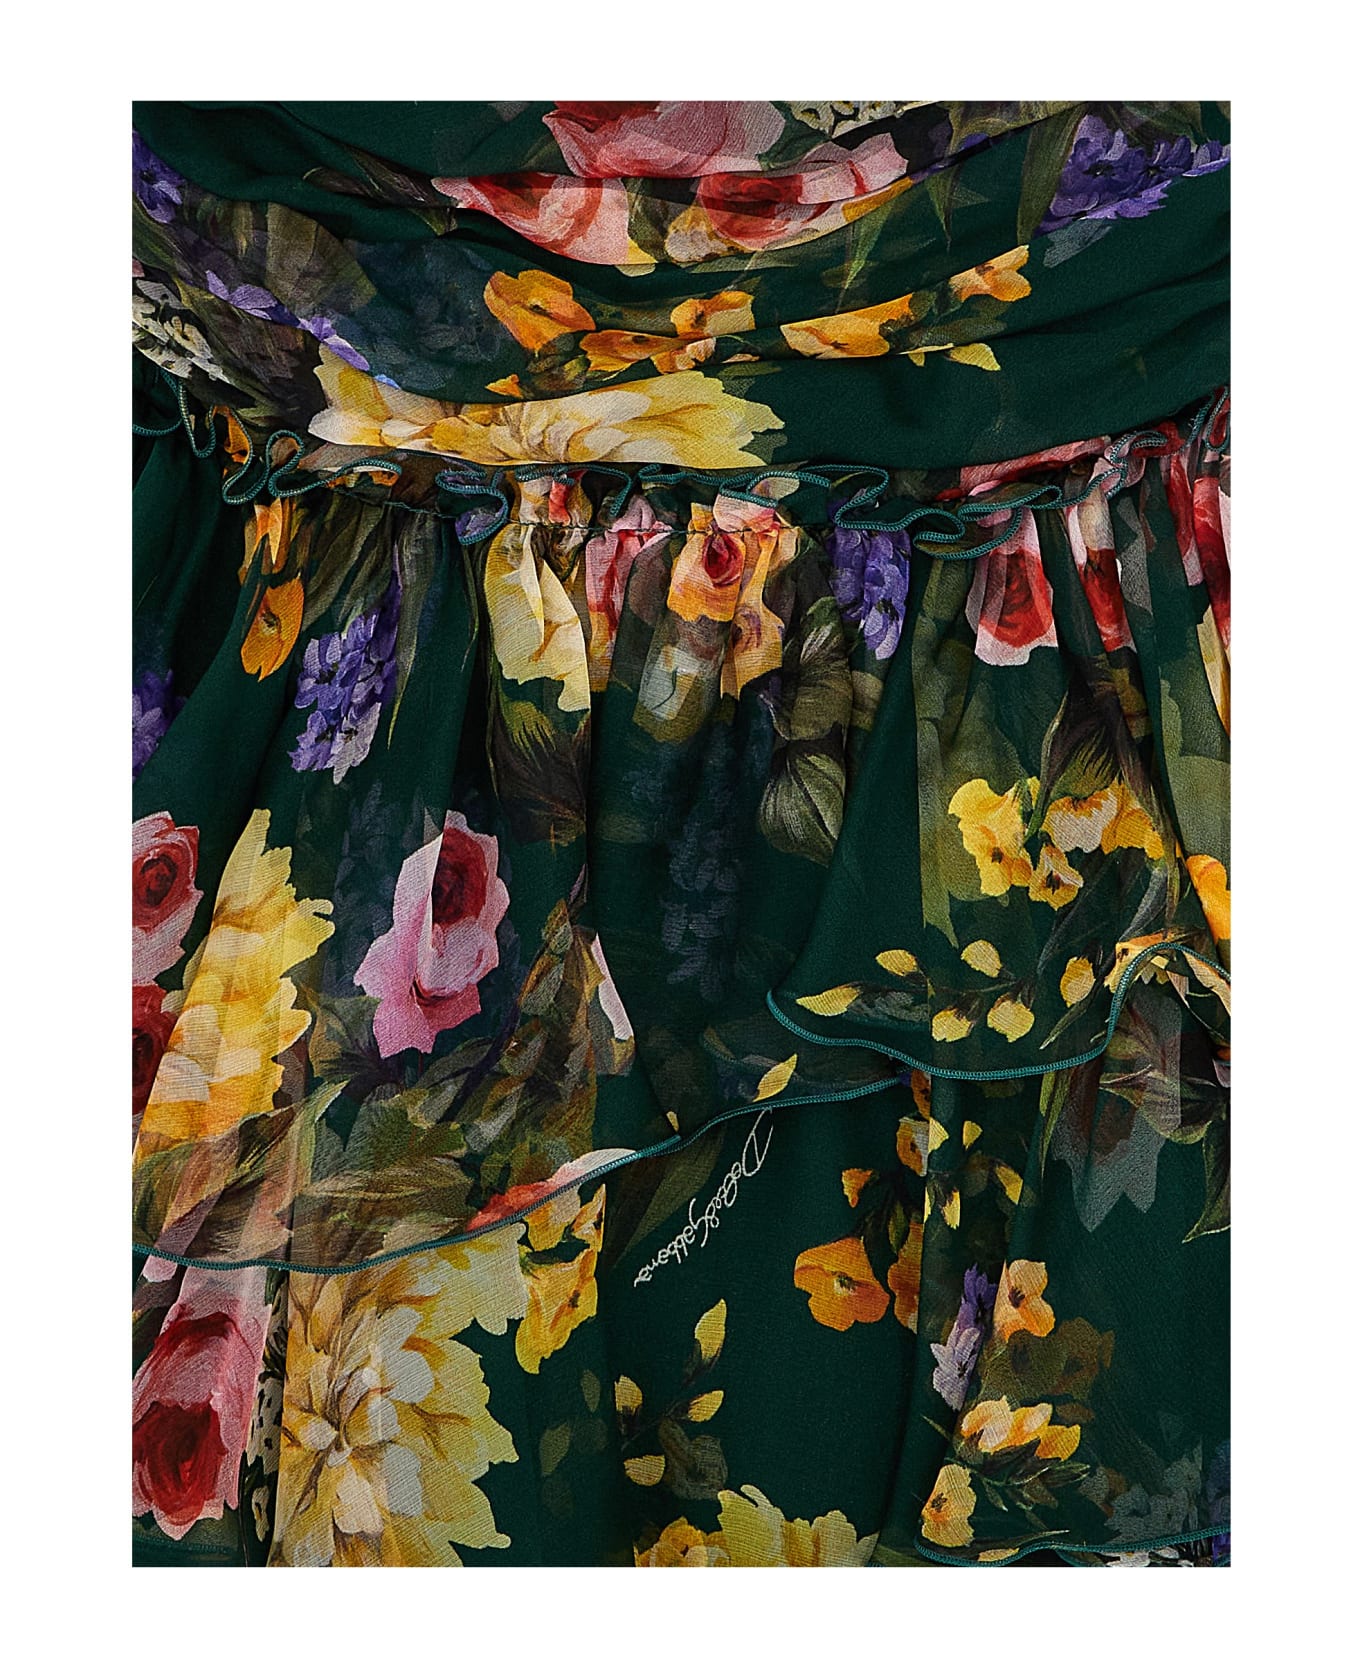 Dolce & Gabbana Floral Chiffon Skirt - Multicolor ボトムス